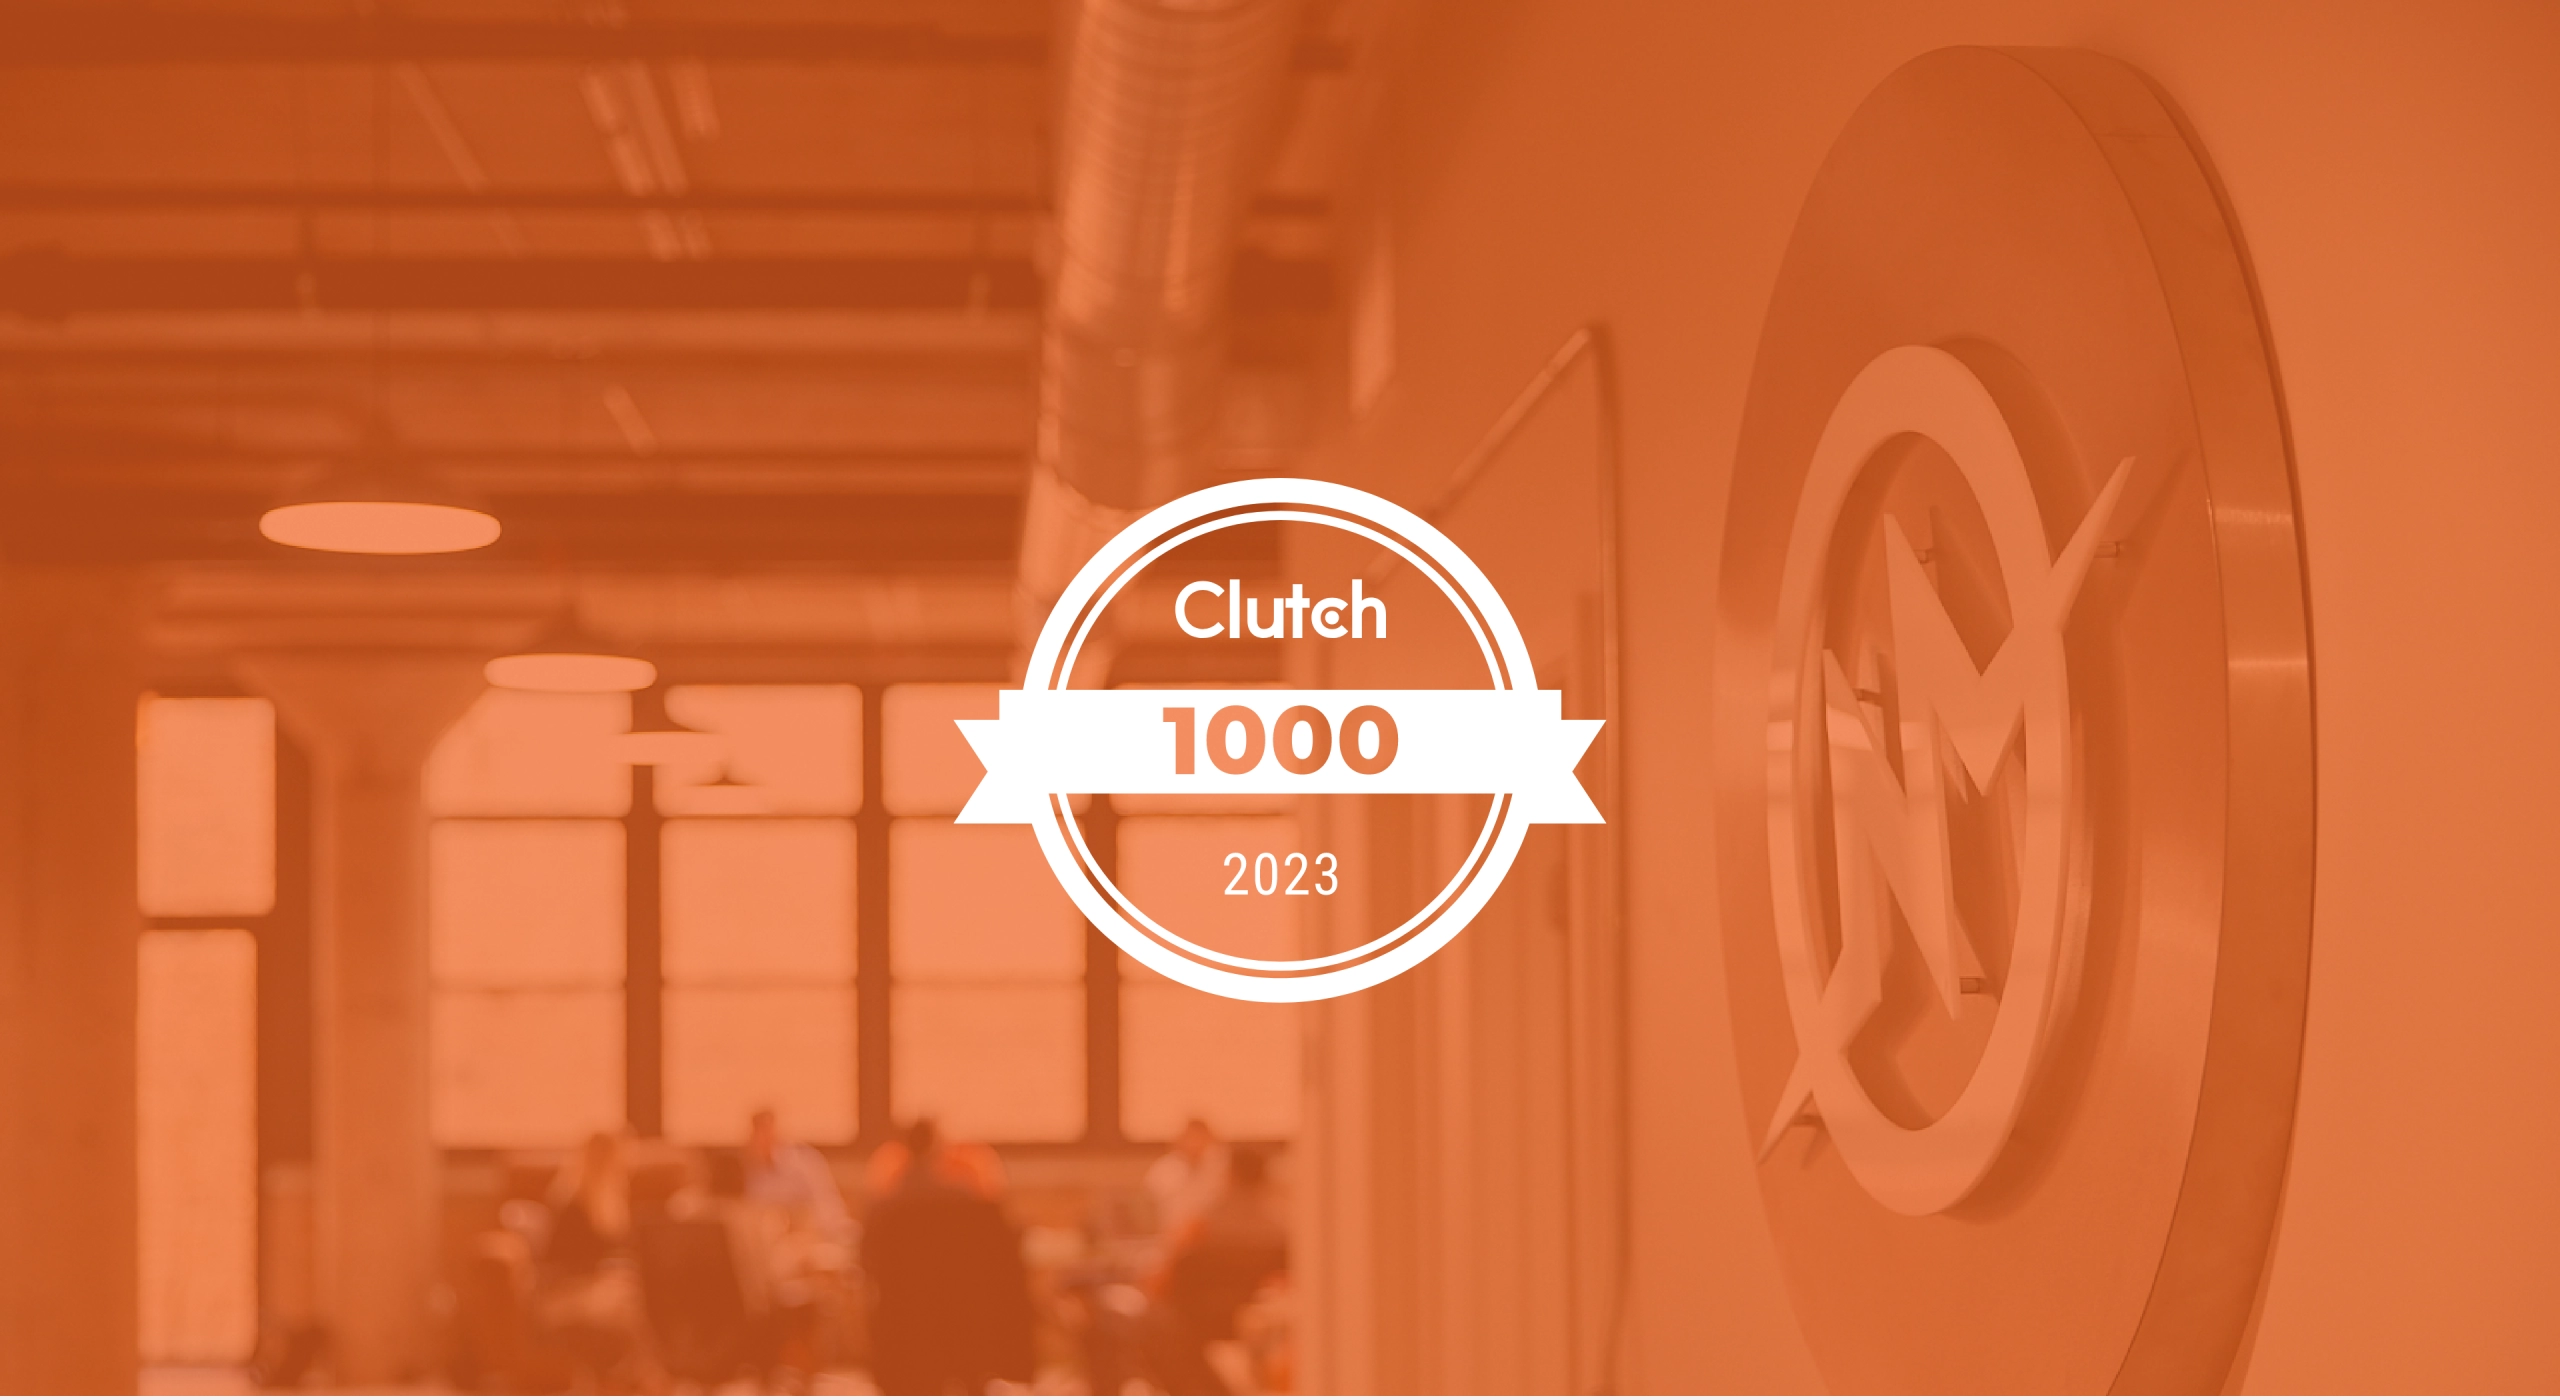 Clutch Champion 1000 2023